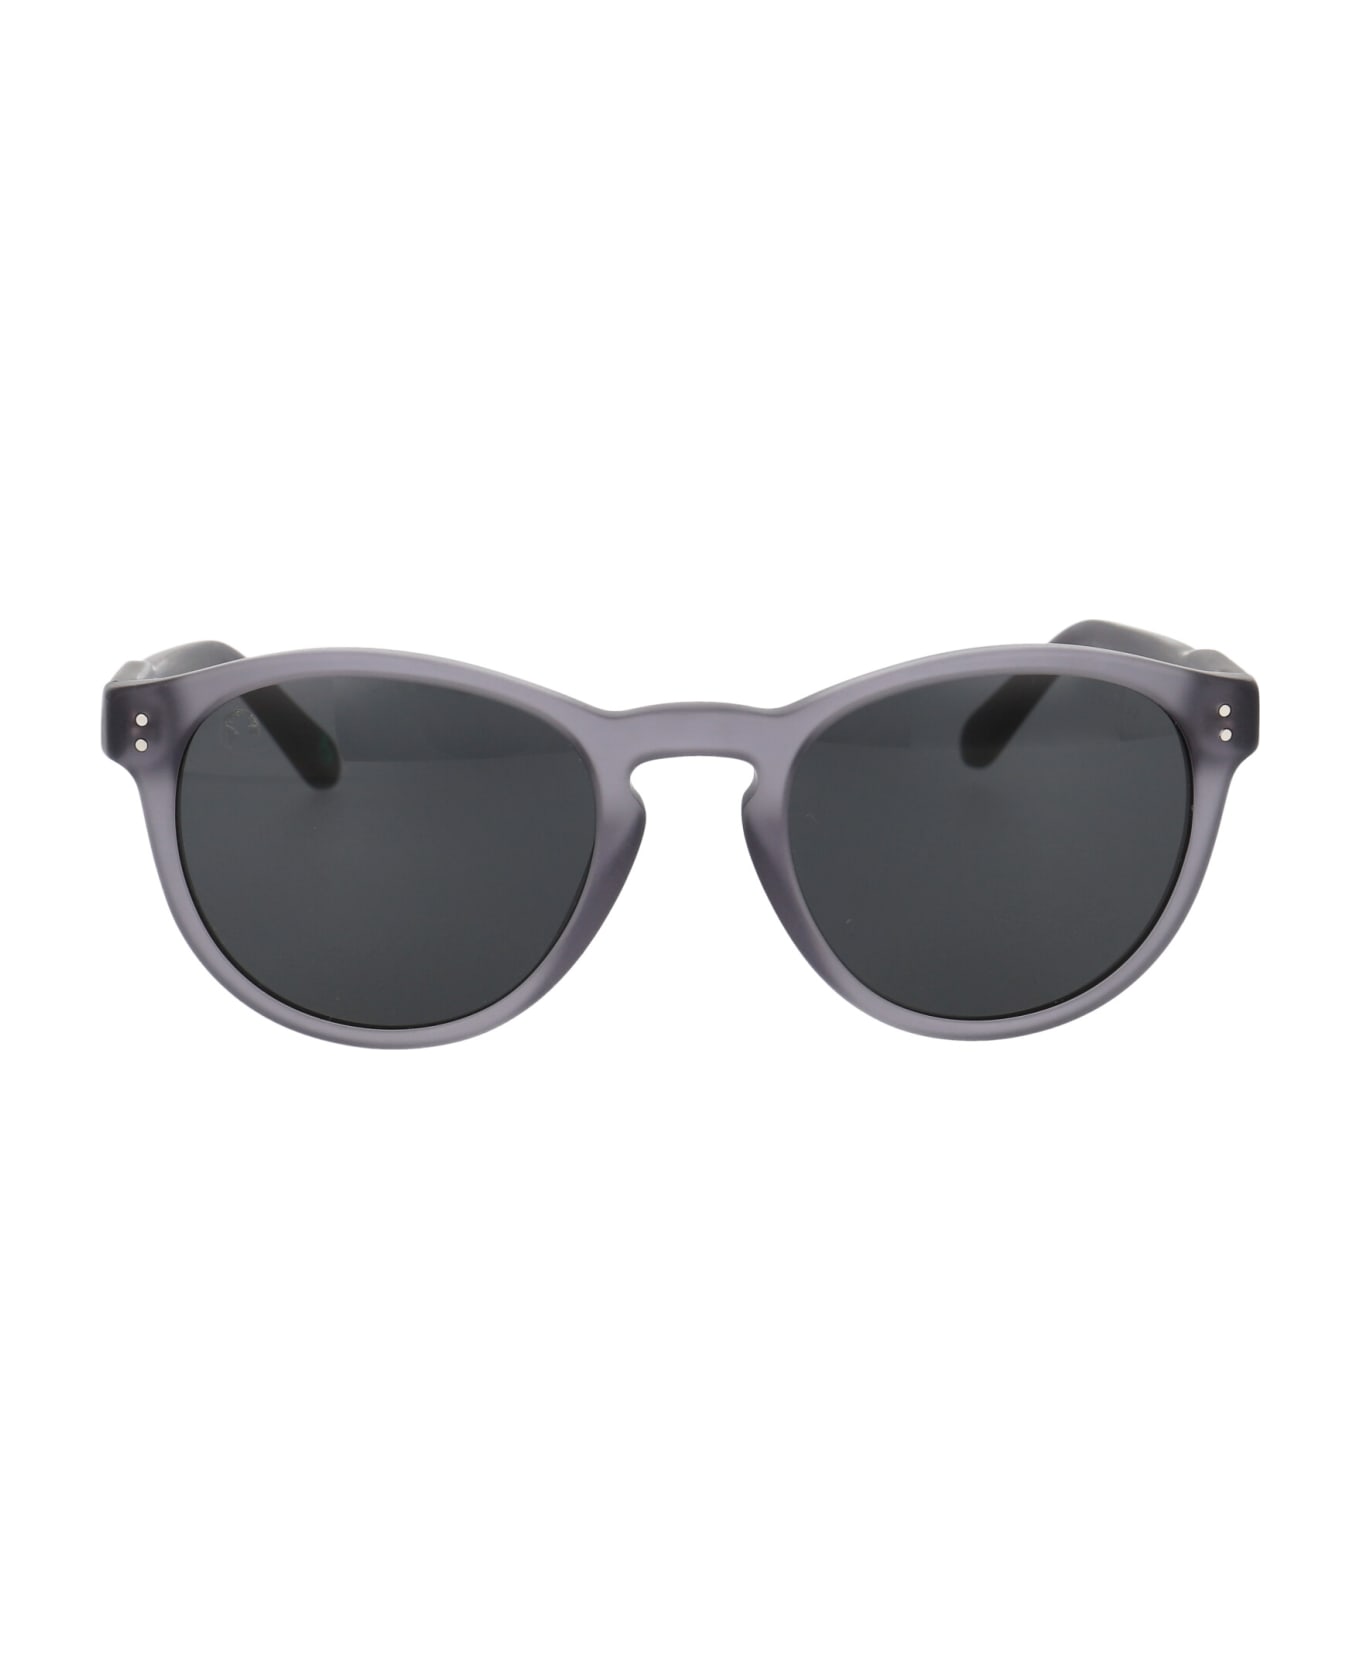 Polo Ralph Lauren 0ph4172 Sunglasses - 595387 MATTE TRANSPARENT DARK GREY サングラス